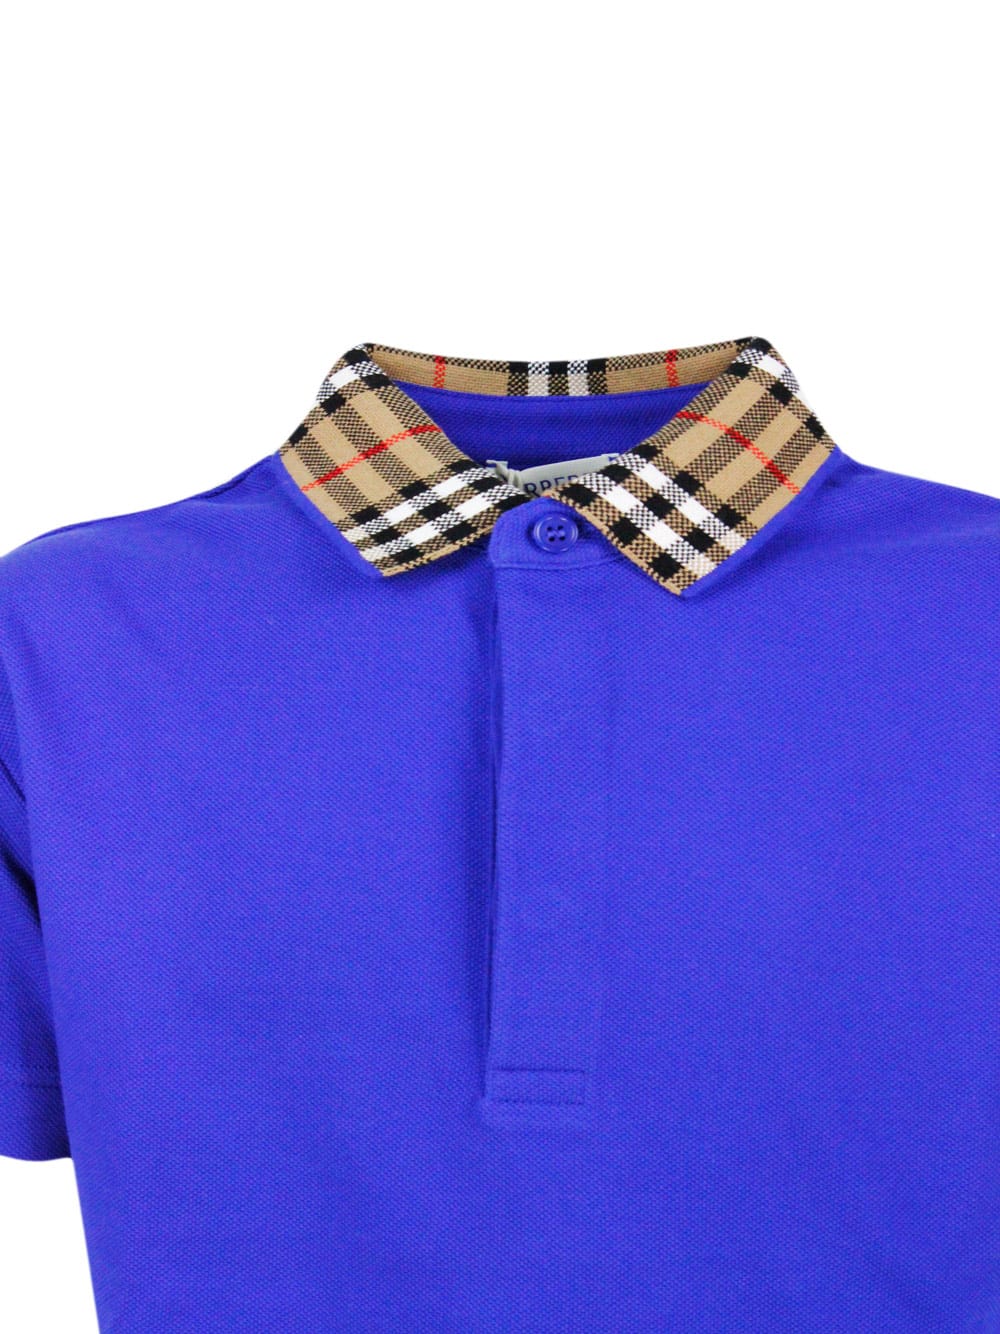 Shop Burberry Piqué Cotton Polo Shirt With Check Collar And Button Closure In Blu Royal